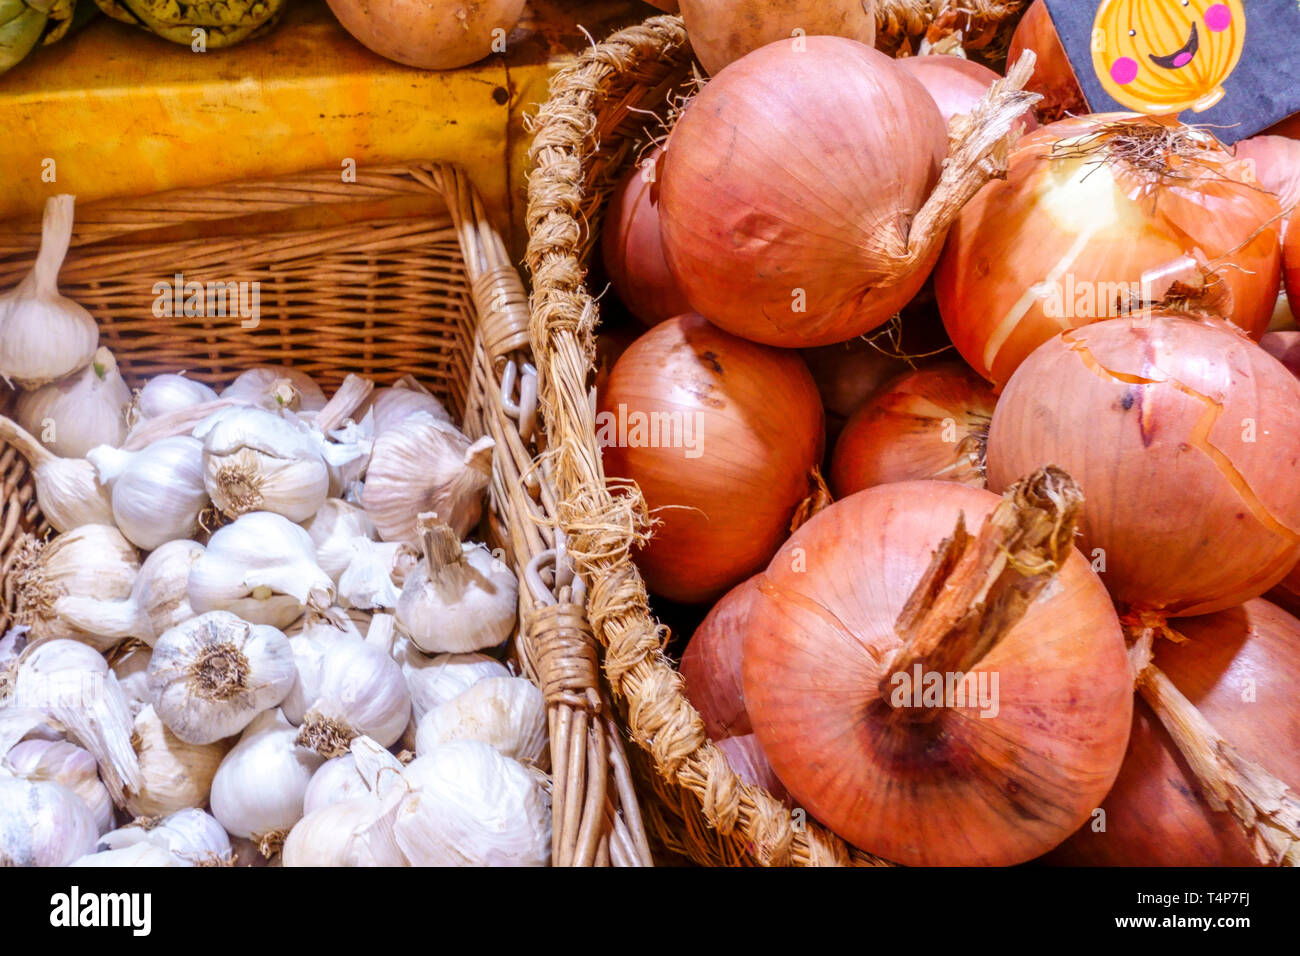 Vegetable market onions garlicks in basket Stock Photo